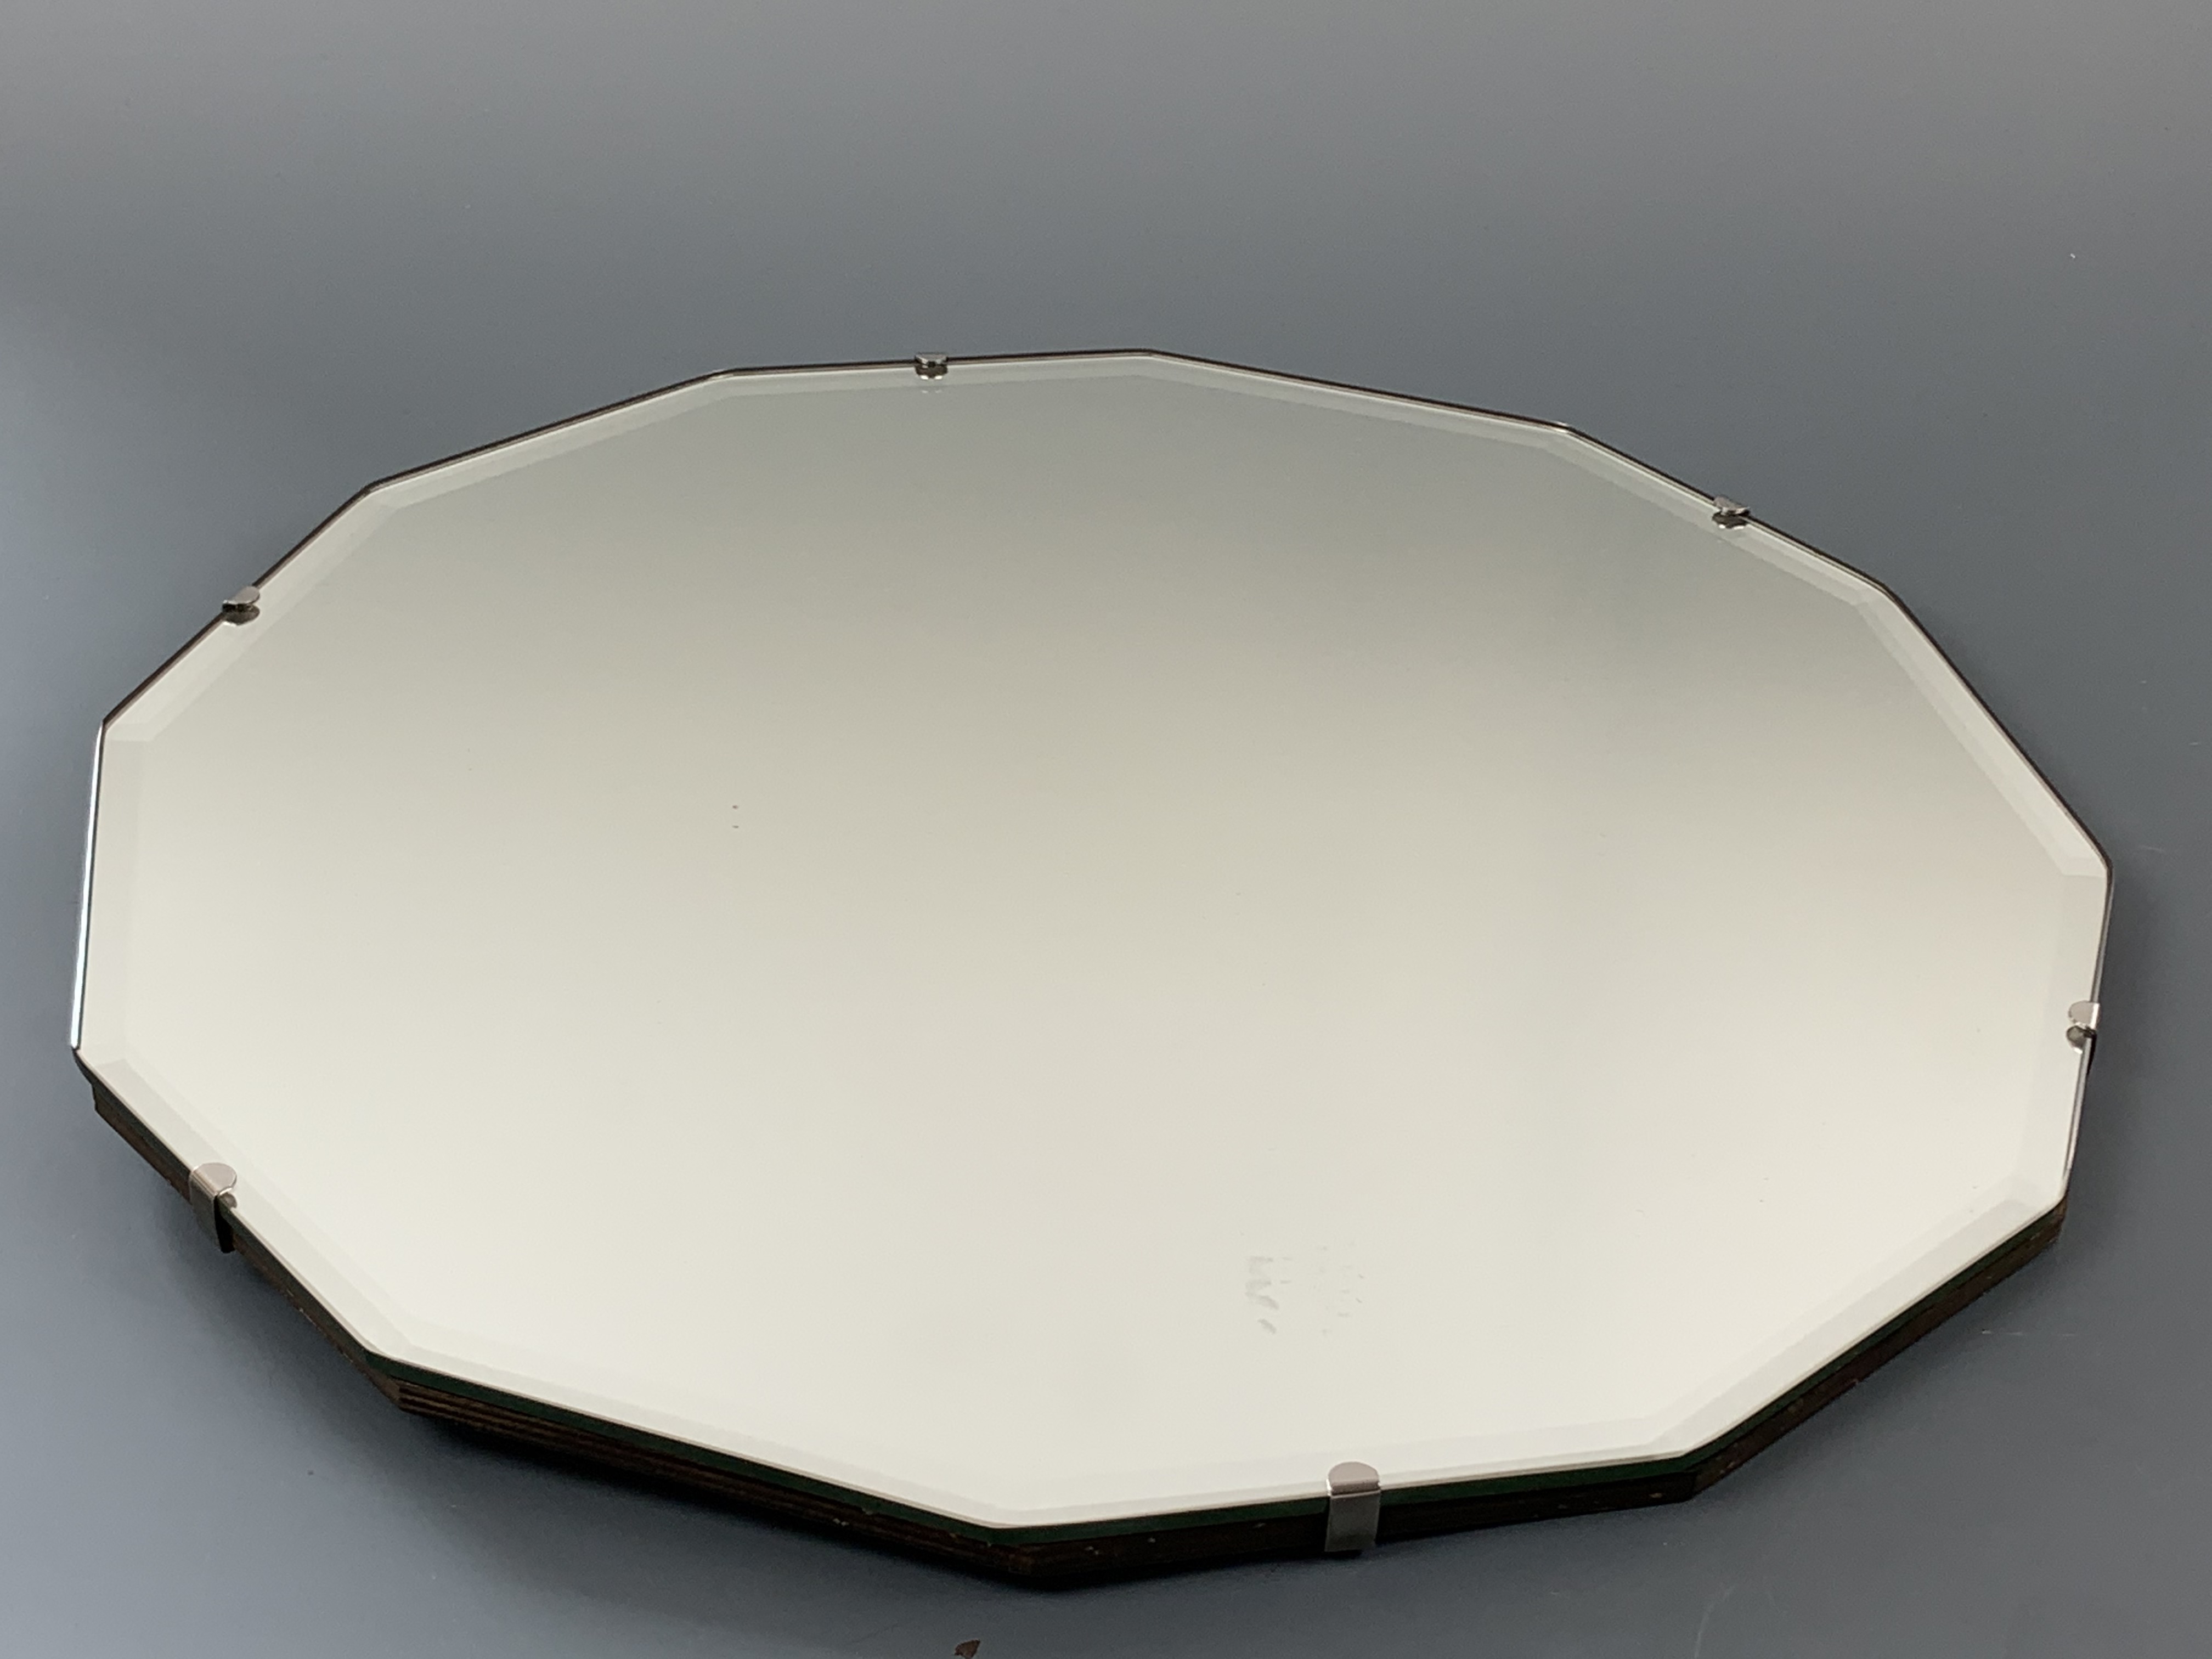 A bevel edged polygonal wall mirror circa 1930s - 1950s, 46 cm diameter - Image 4 of 4